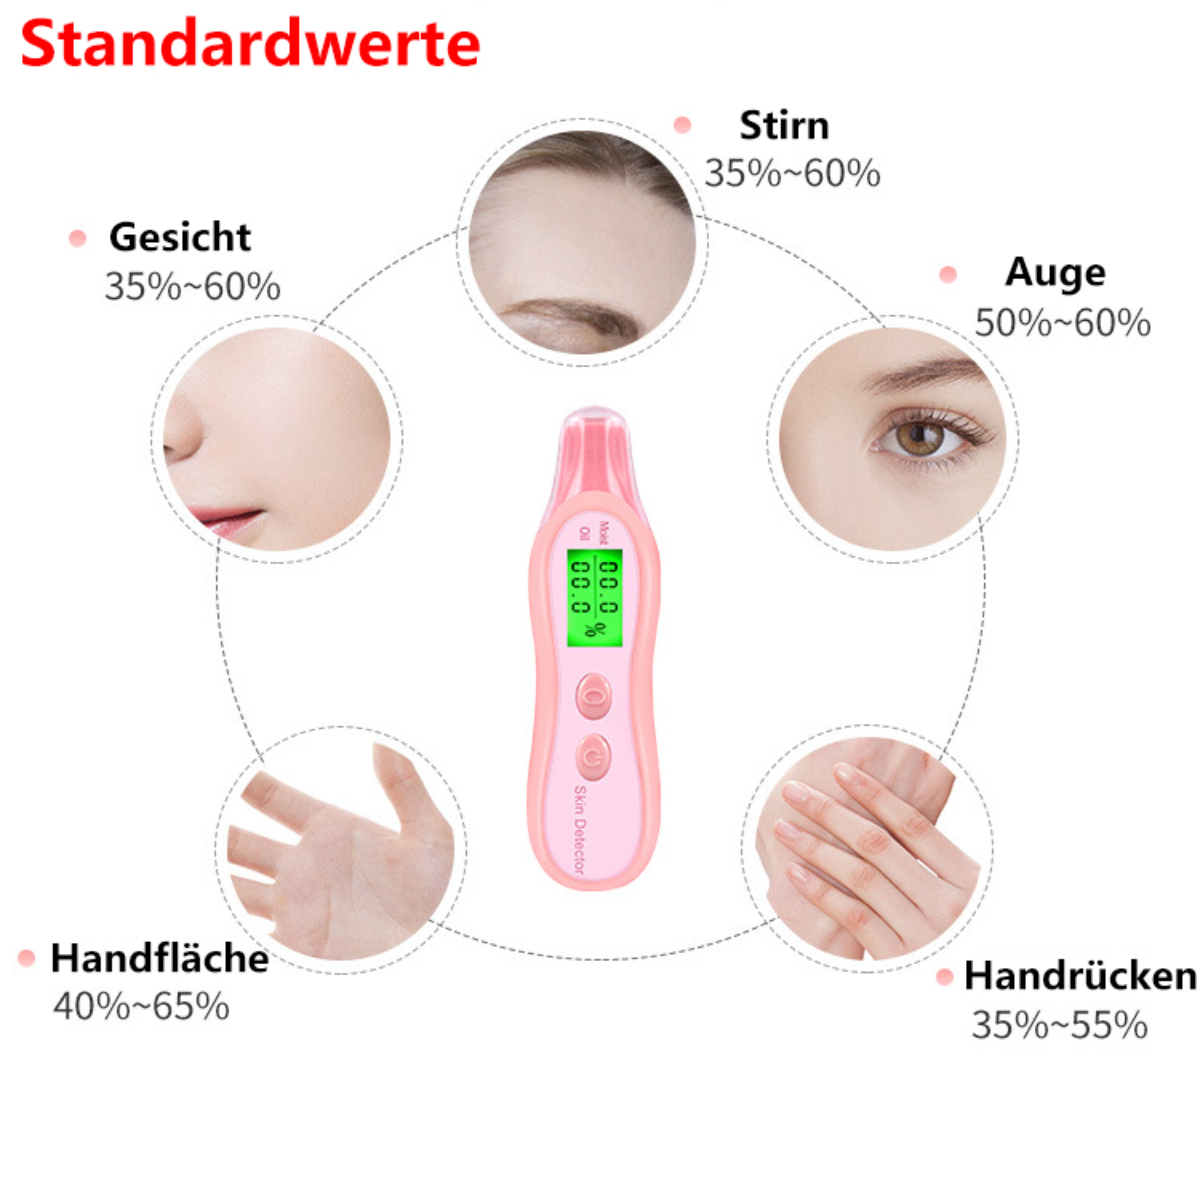 SYNTEK Hauttester Rosa Öl Stift Analysator Meter Ventilator Home Beauty Hautfeuchtigkeit